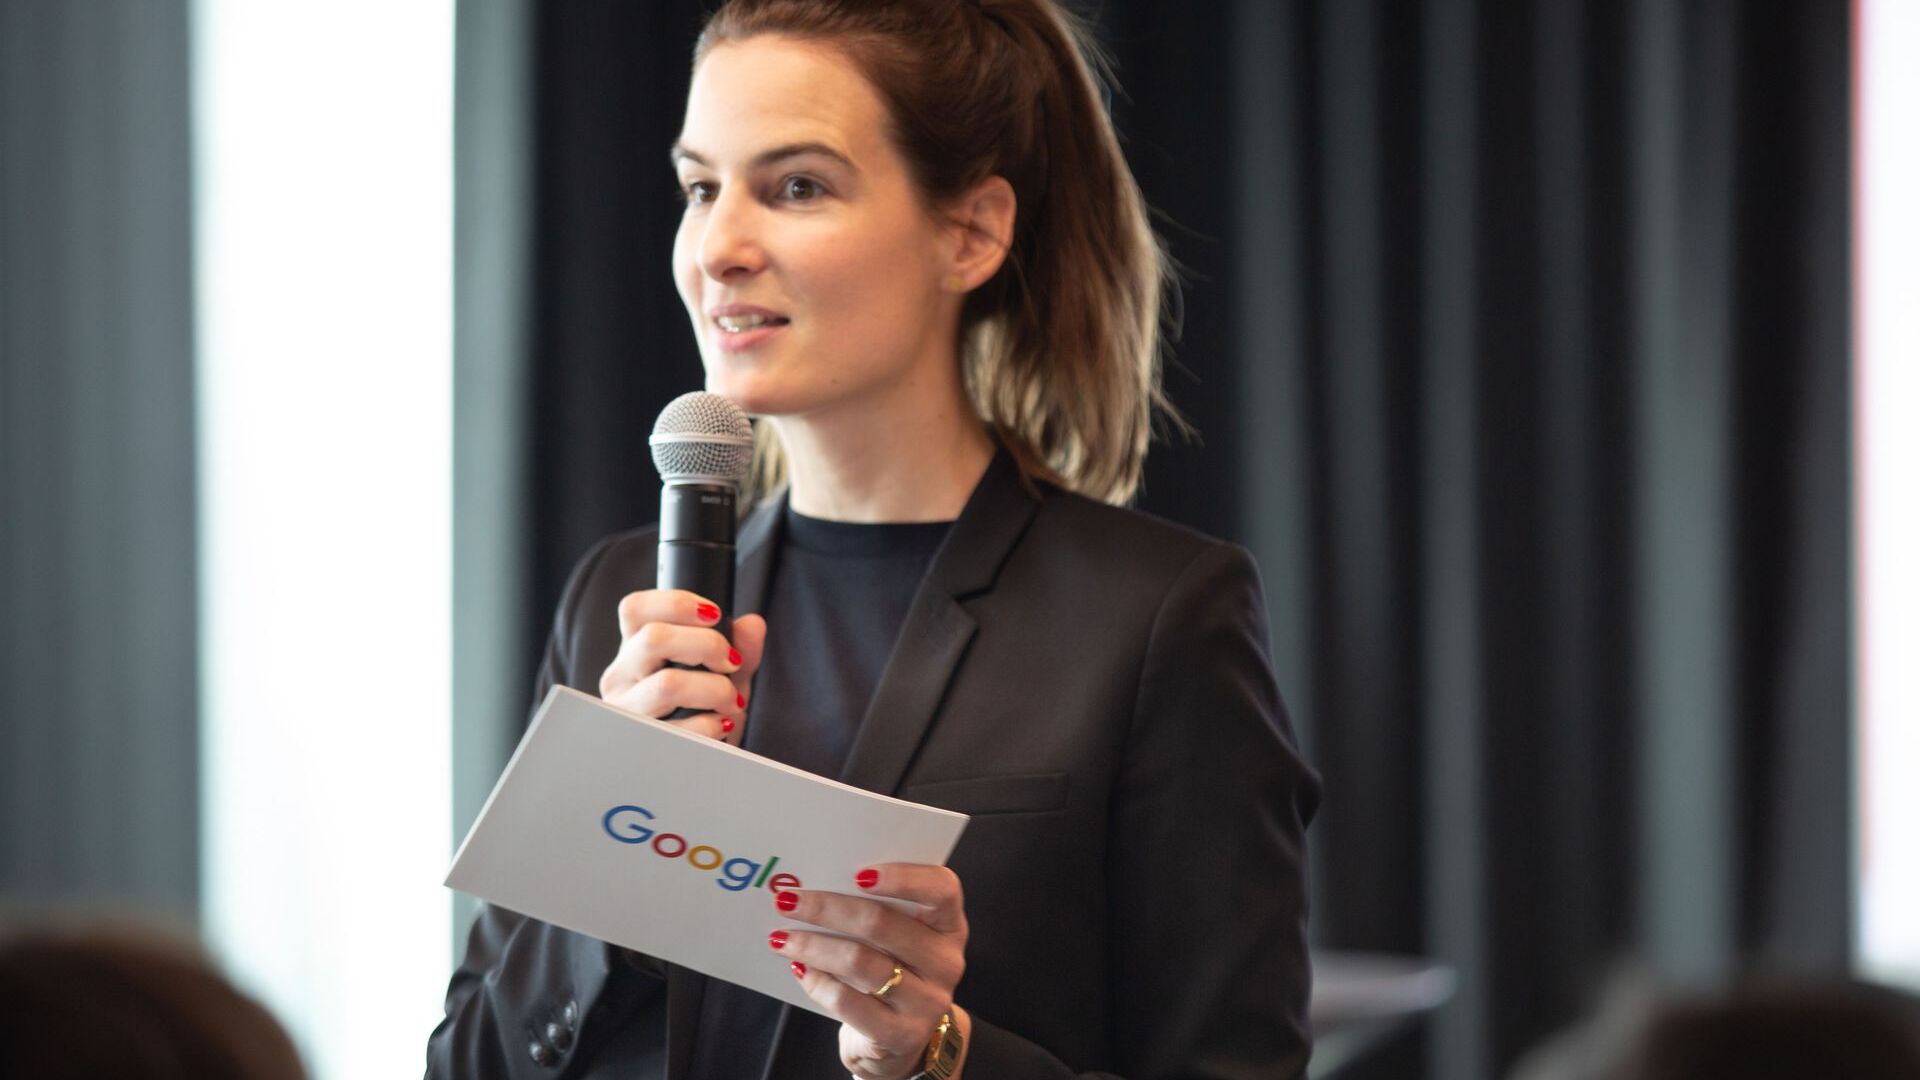 Pia De Carli, צוות המדיה של גוגל שוויץ, השתתפה בחנוכה הרשמית של קמפוס ה-Europaallee החדש של גוגל בציריך ב-27 ביוני 2022